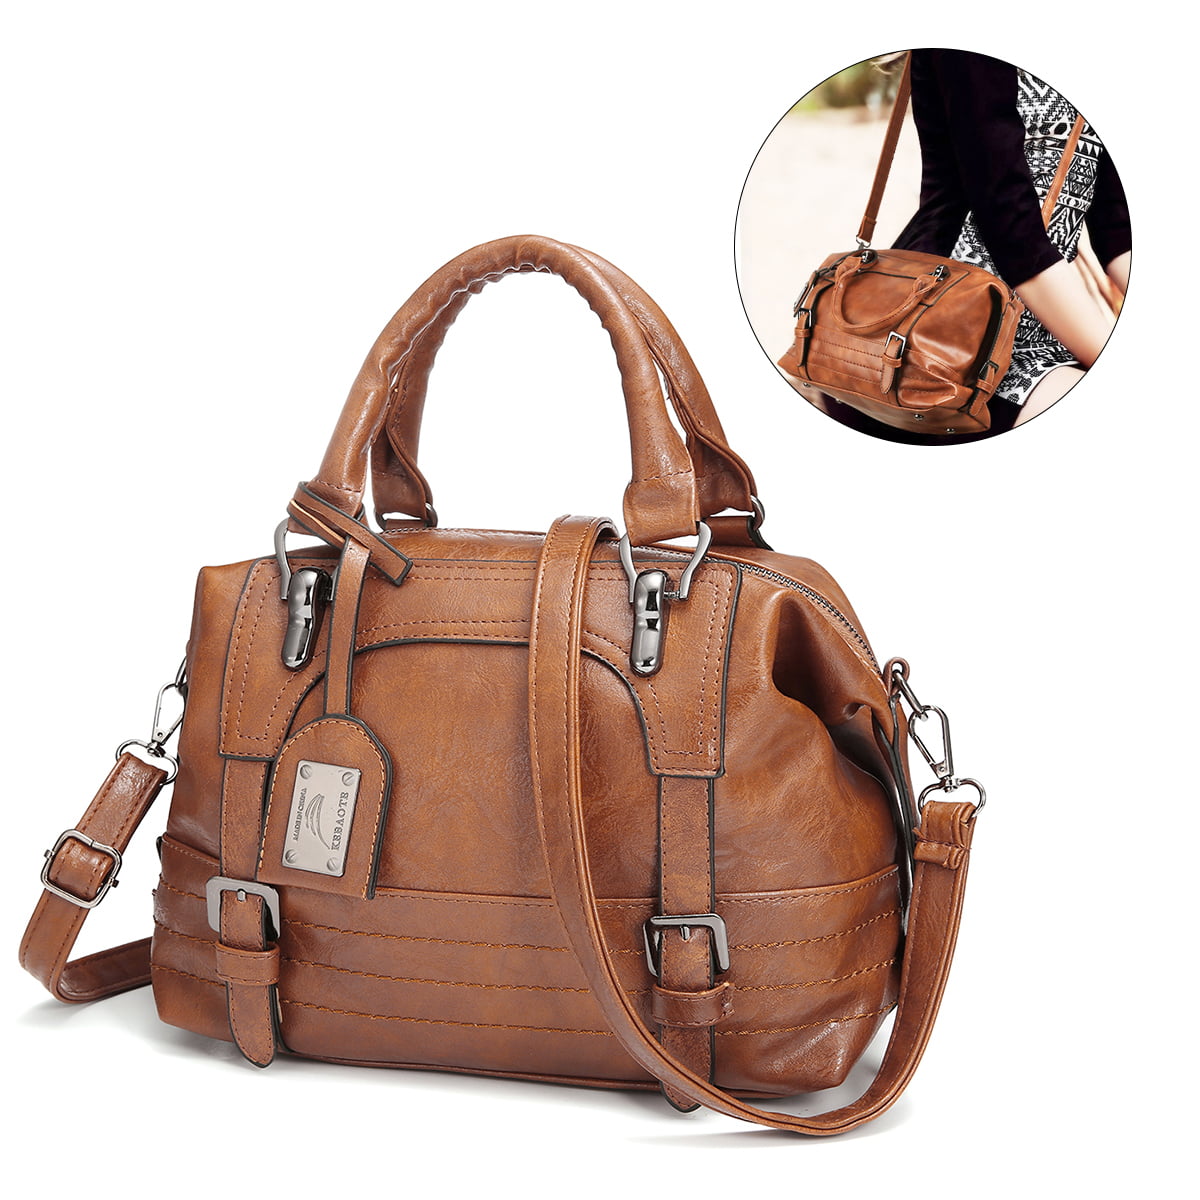 Fashion Women Leather Tote Shoulder Handbag Satchel Messenger Shopping Bag Purse 